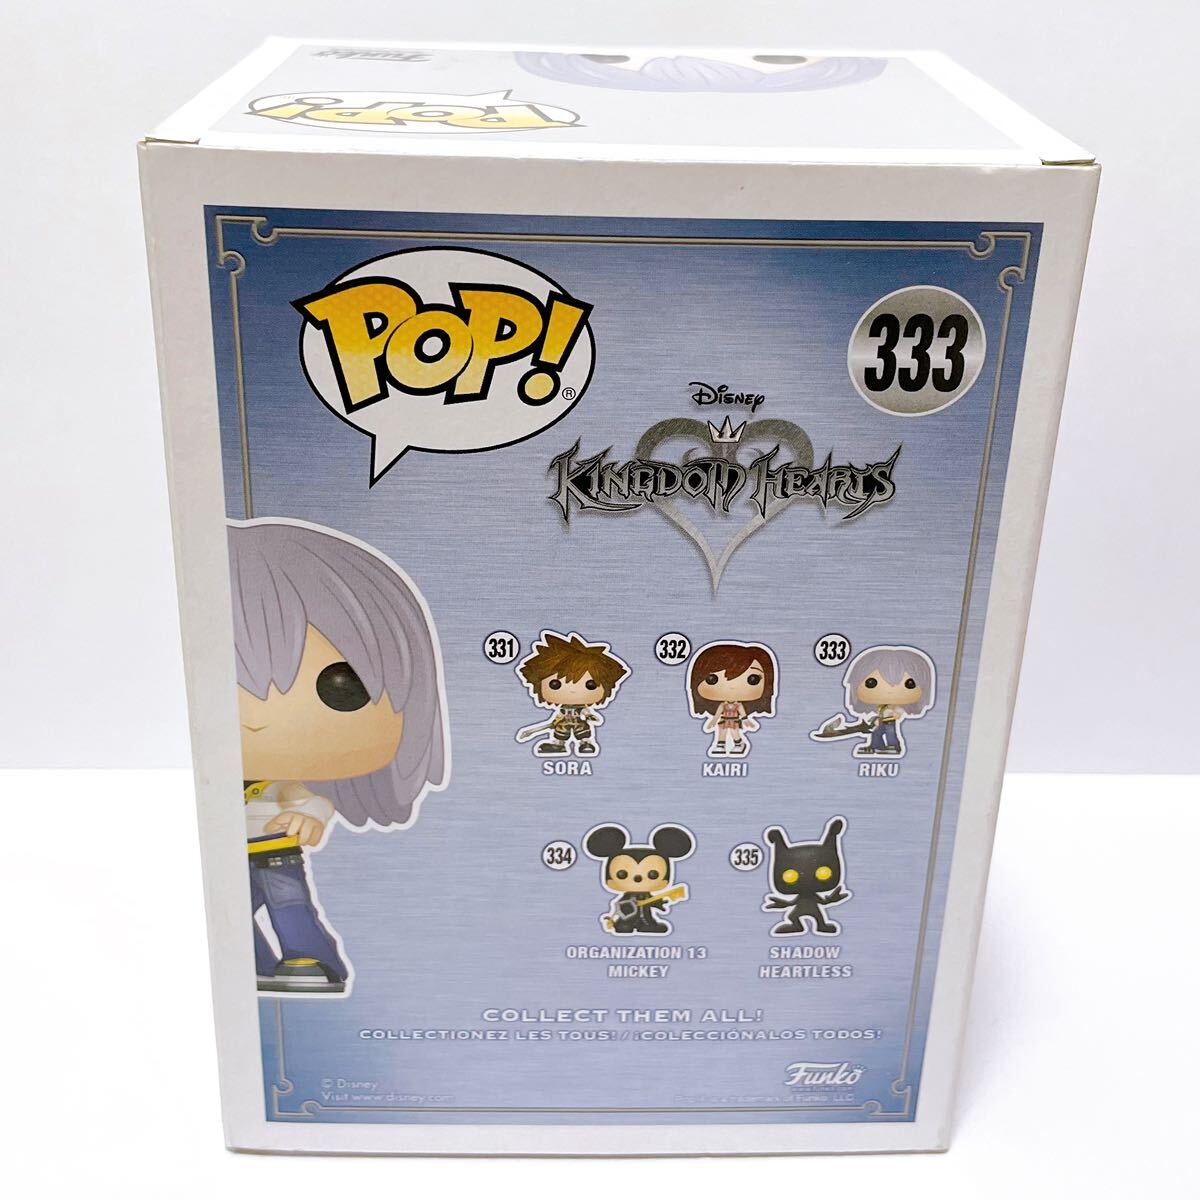 POP! POP Disney Disney Kingdom Hearts серии Kingdom Hearts KINGDOM HEARTSlik фигурка эмблема кукла кукла украшение 